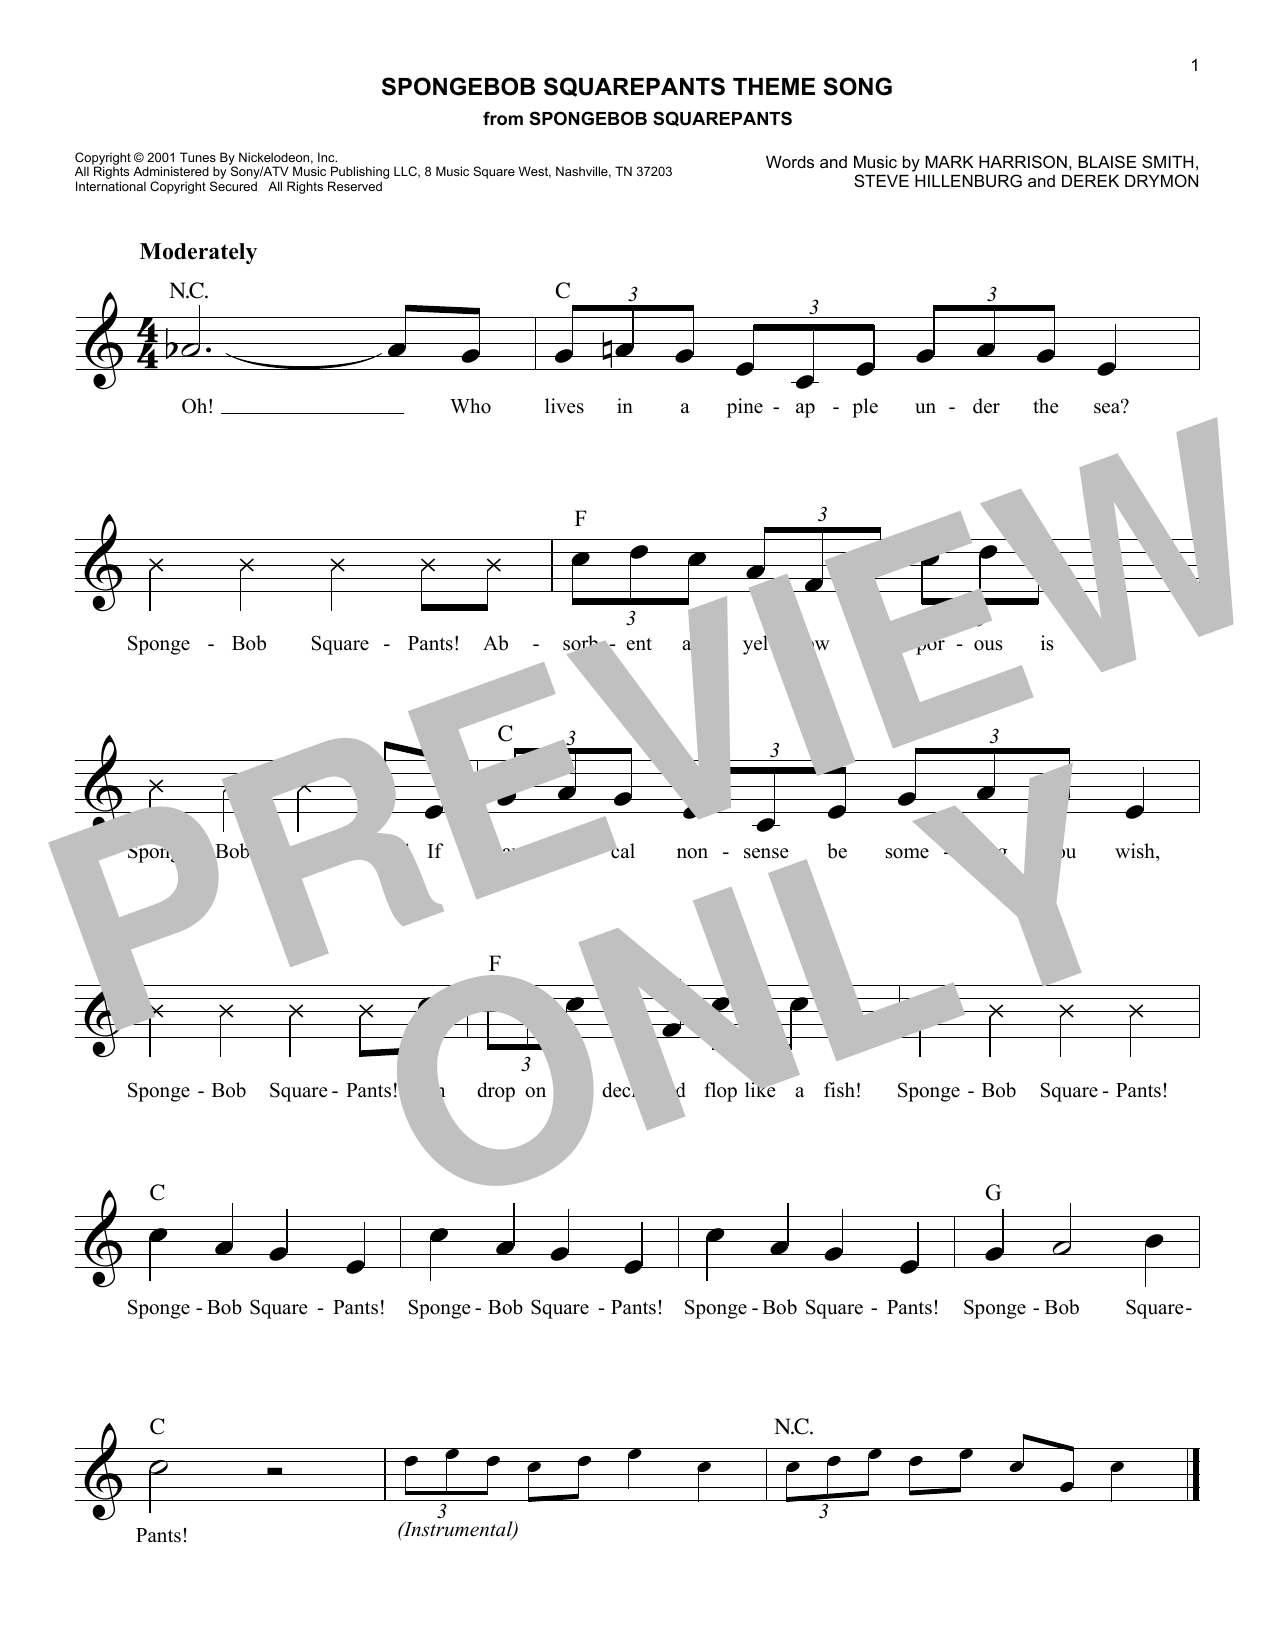 Steve Hillenburg SpongeBob SquarePants Theme Song sheet music notes and chords arranged for Lead Sheet / Fake Book